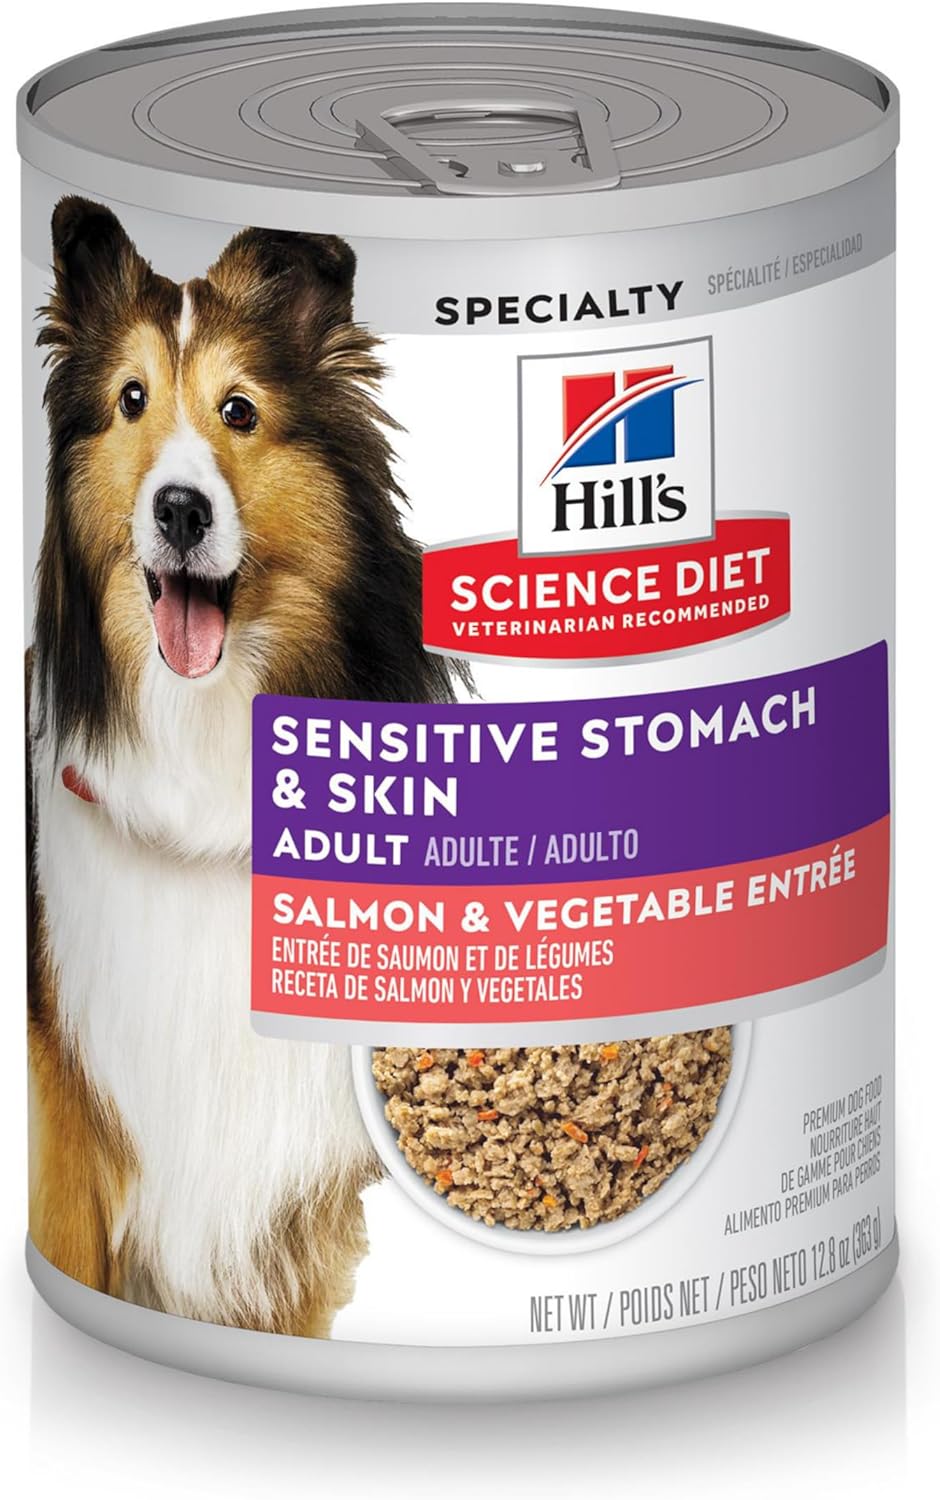 Hill's Science Diet Sensitive Stomach & Skin, Adult 1-6, Stomach & Skin Sensitivity Supoort, Wet Dog Food, Salmon & Vegetables Loaf, 12.8 oz Can, Case of 12